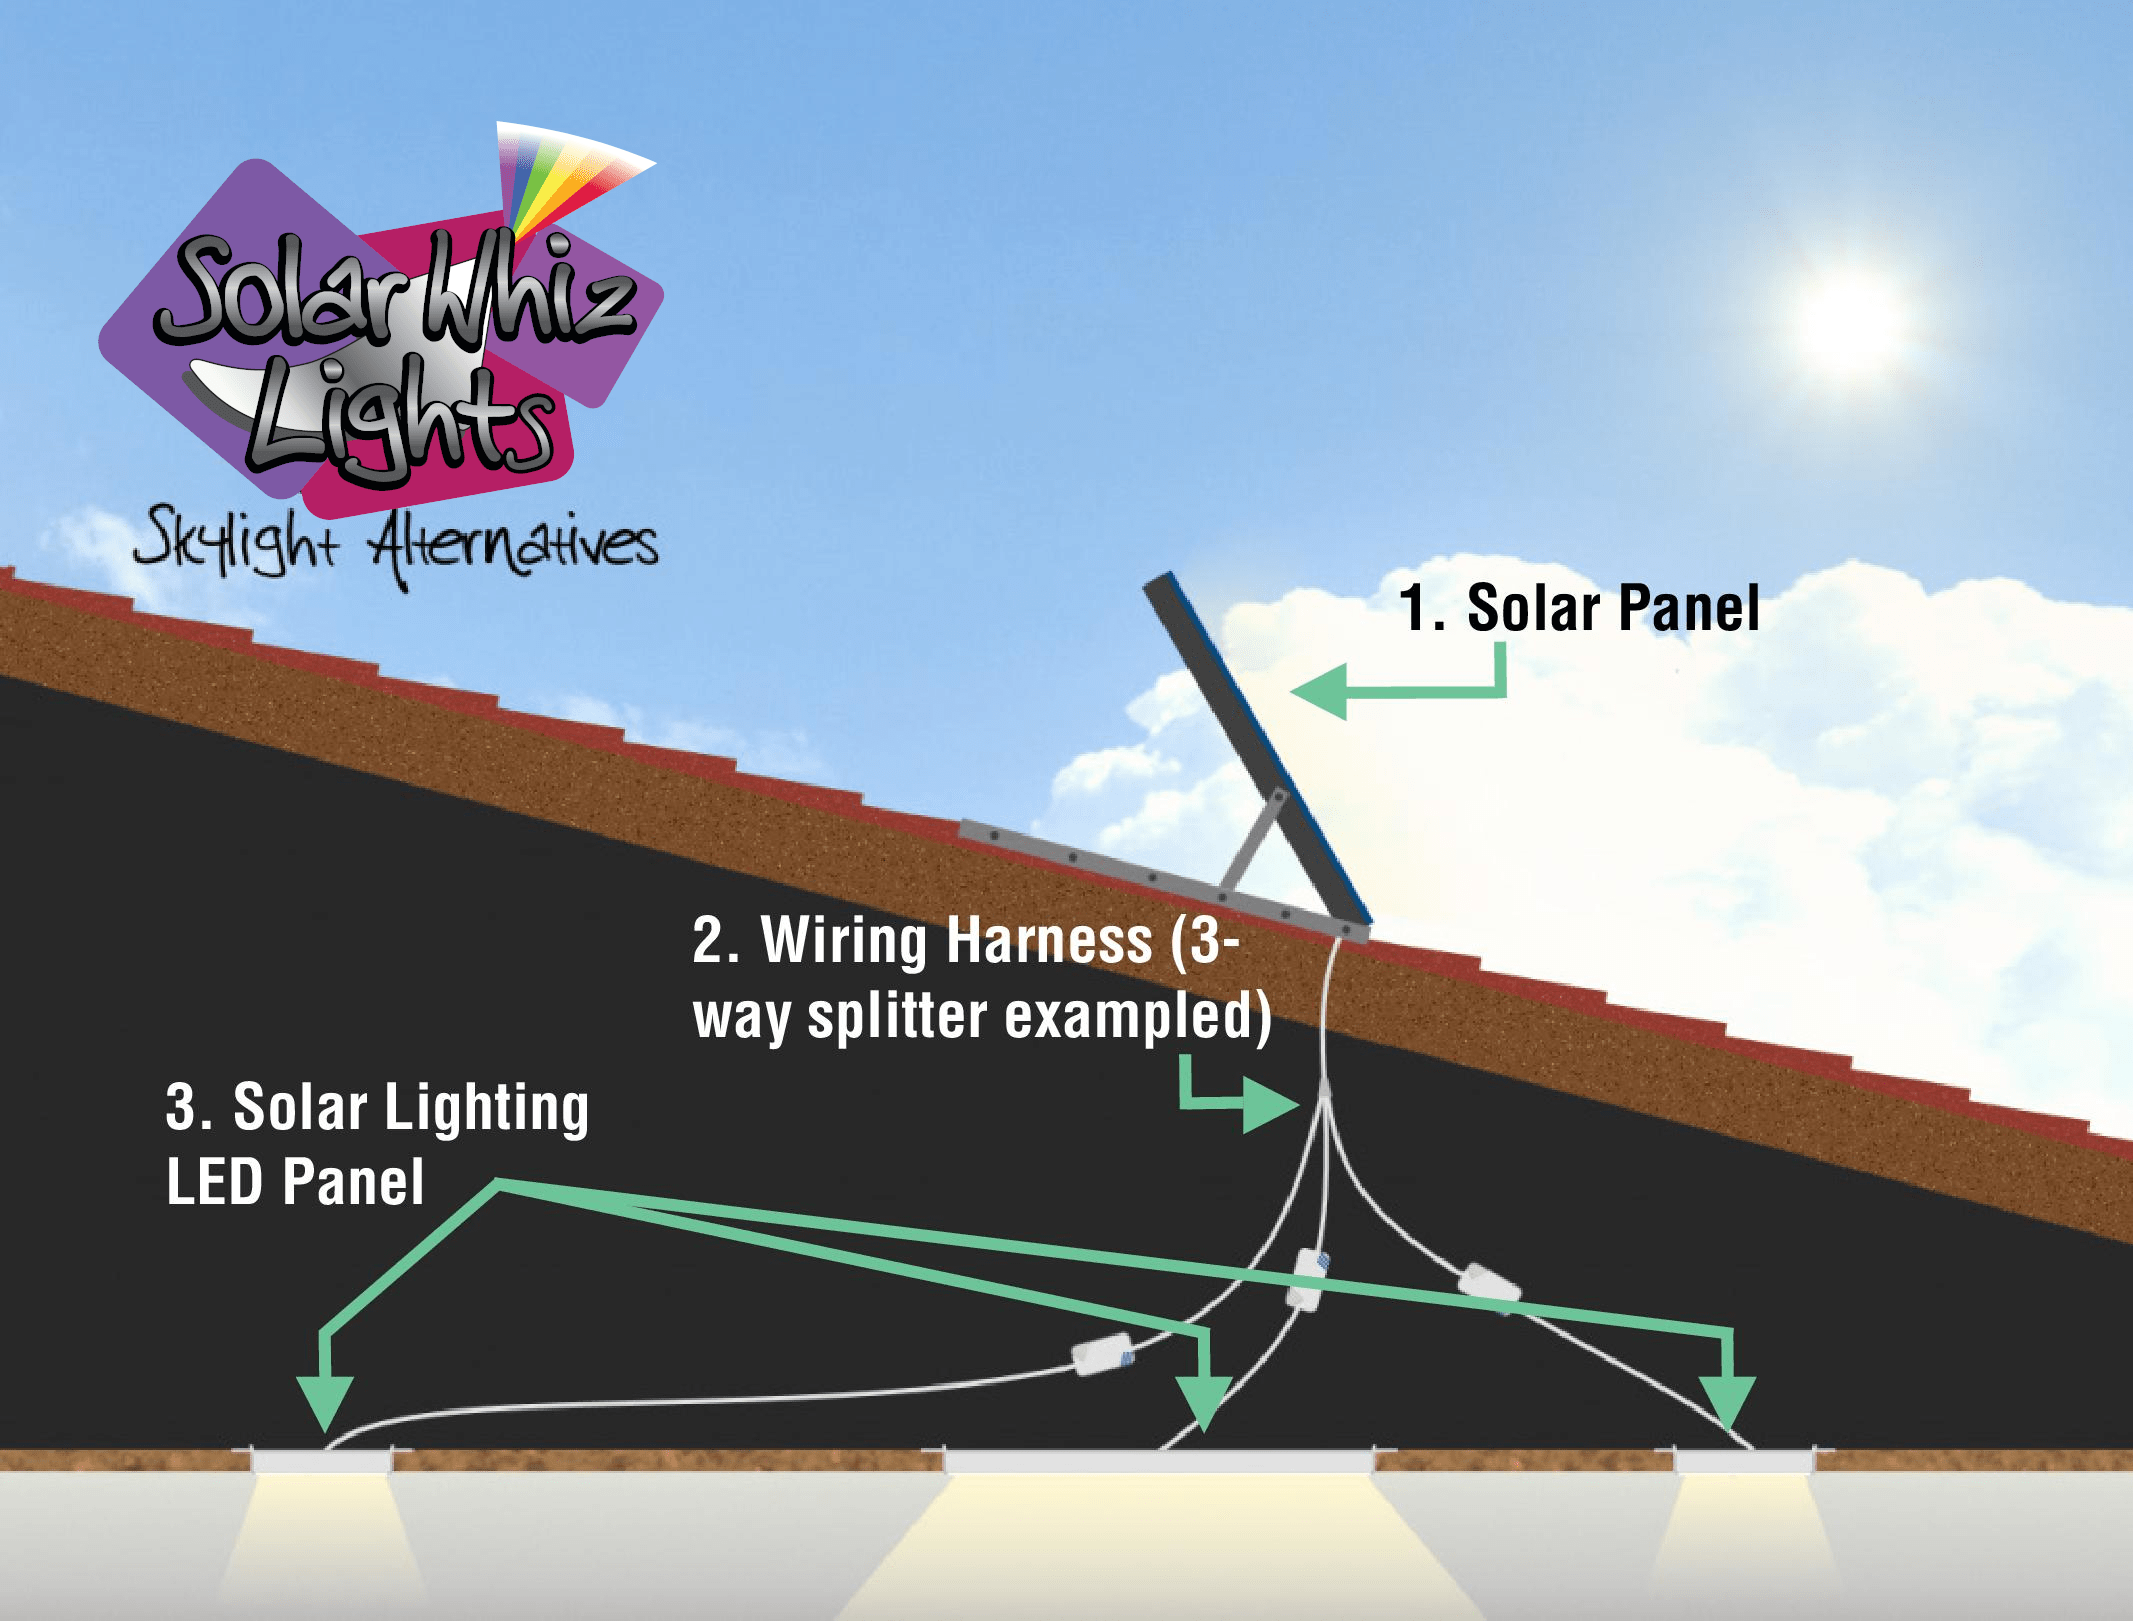 Solar Whiz Lights - simple diagram